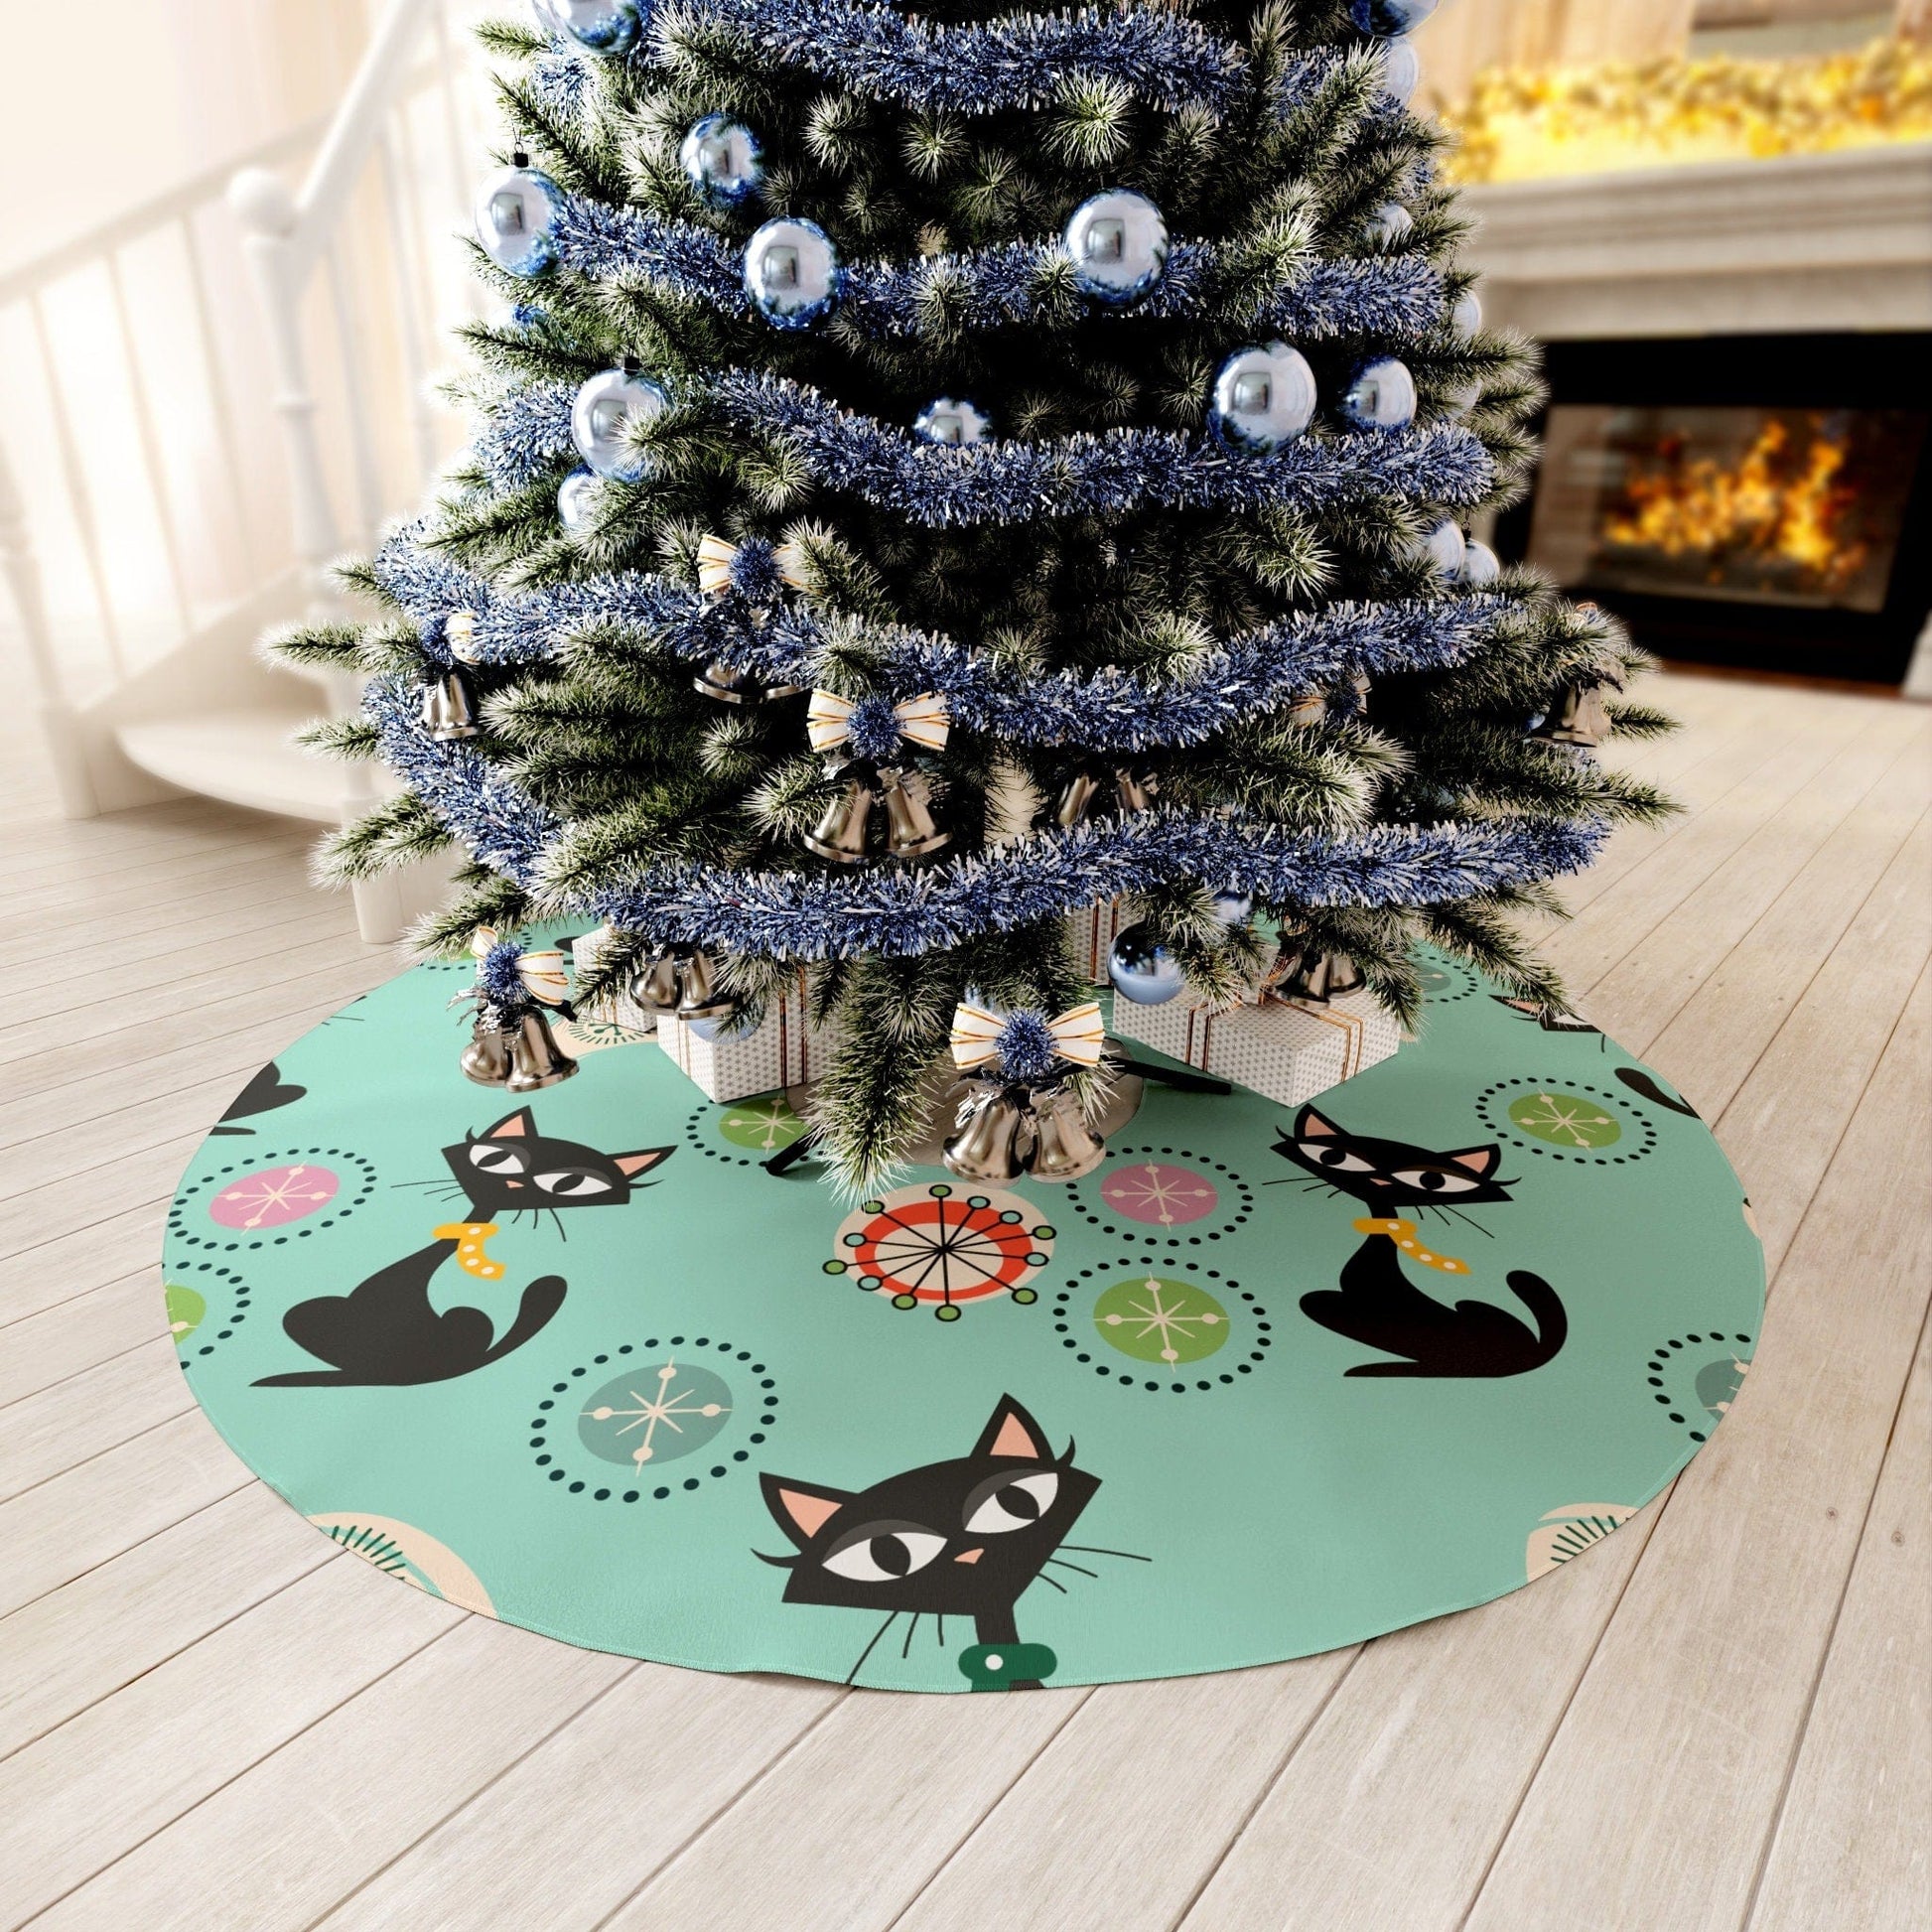 Kate McEnroe New York Atomic Cat Round Tree Skirt, Mid Century Kitschy Holiday, Retro Vintage Christmas Tree Decor Christmas Tree Skirts 22467957878388827427